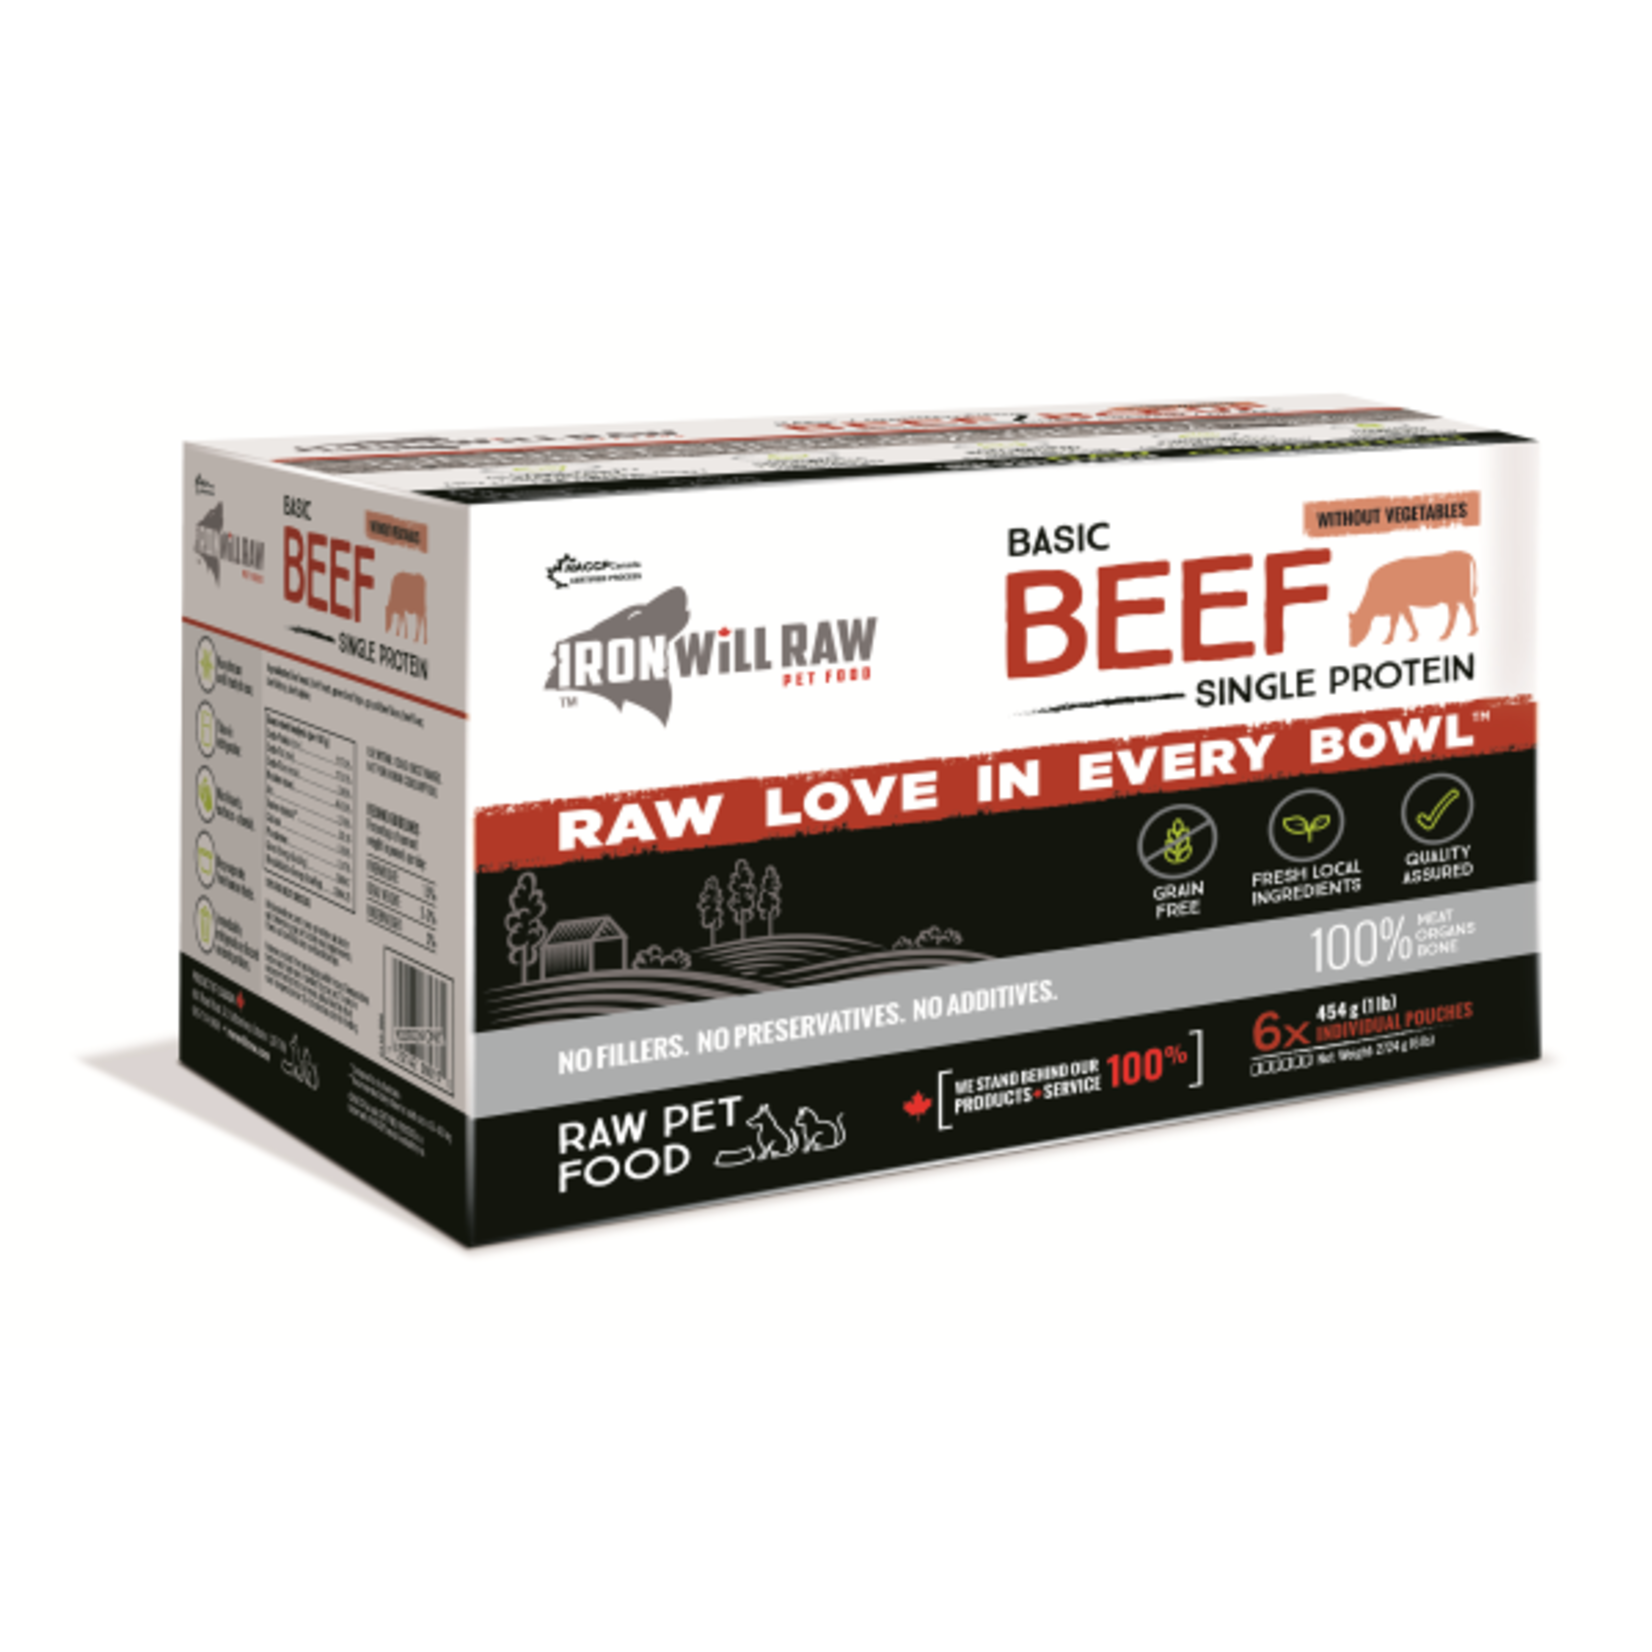 IRON WILL RAW Iron Will Raw Dog GF Basic Beef Single Protein 6/1 lb